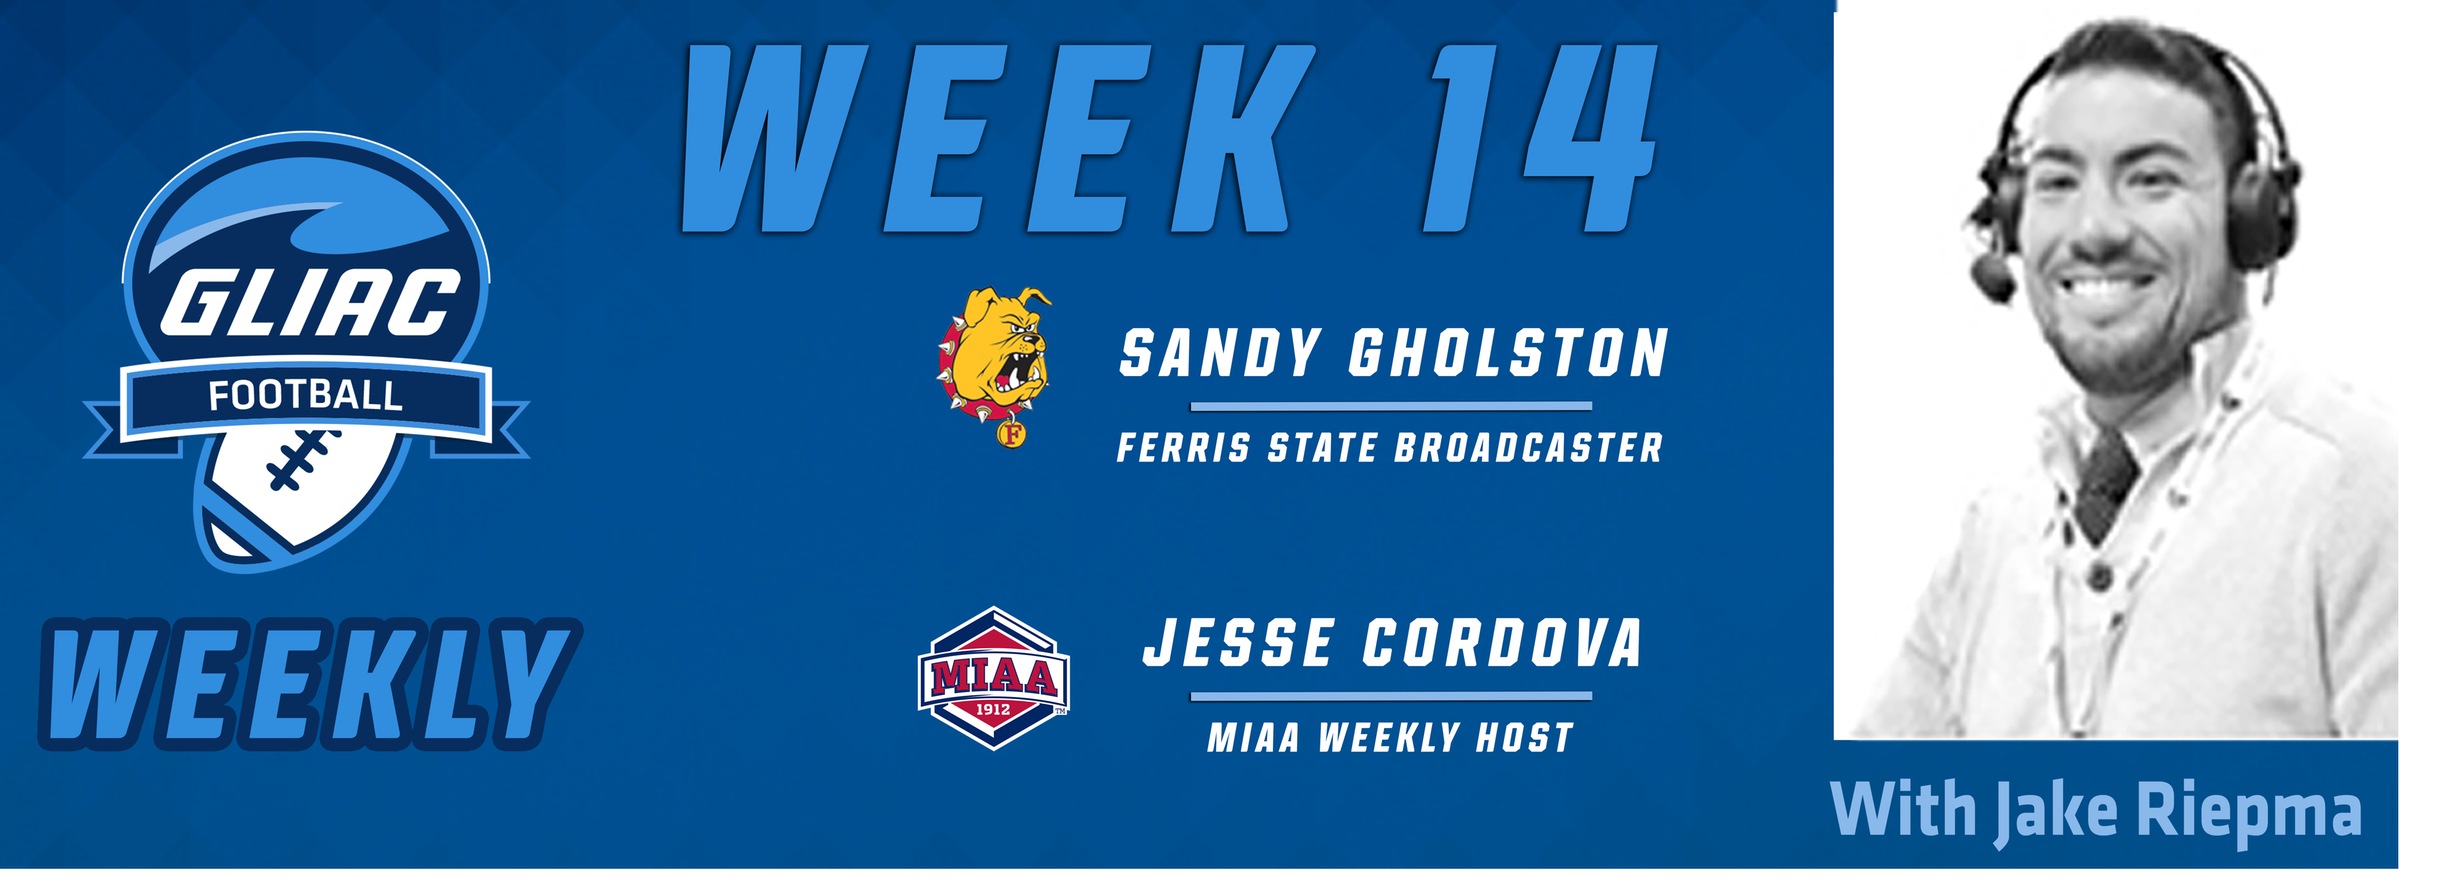 Football Weekly - Week 14 | FSU Sandy Gholston & MIAA's Jesse Cordova